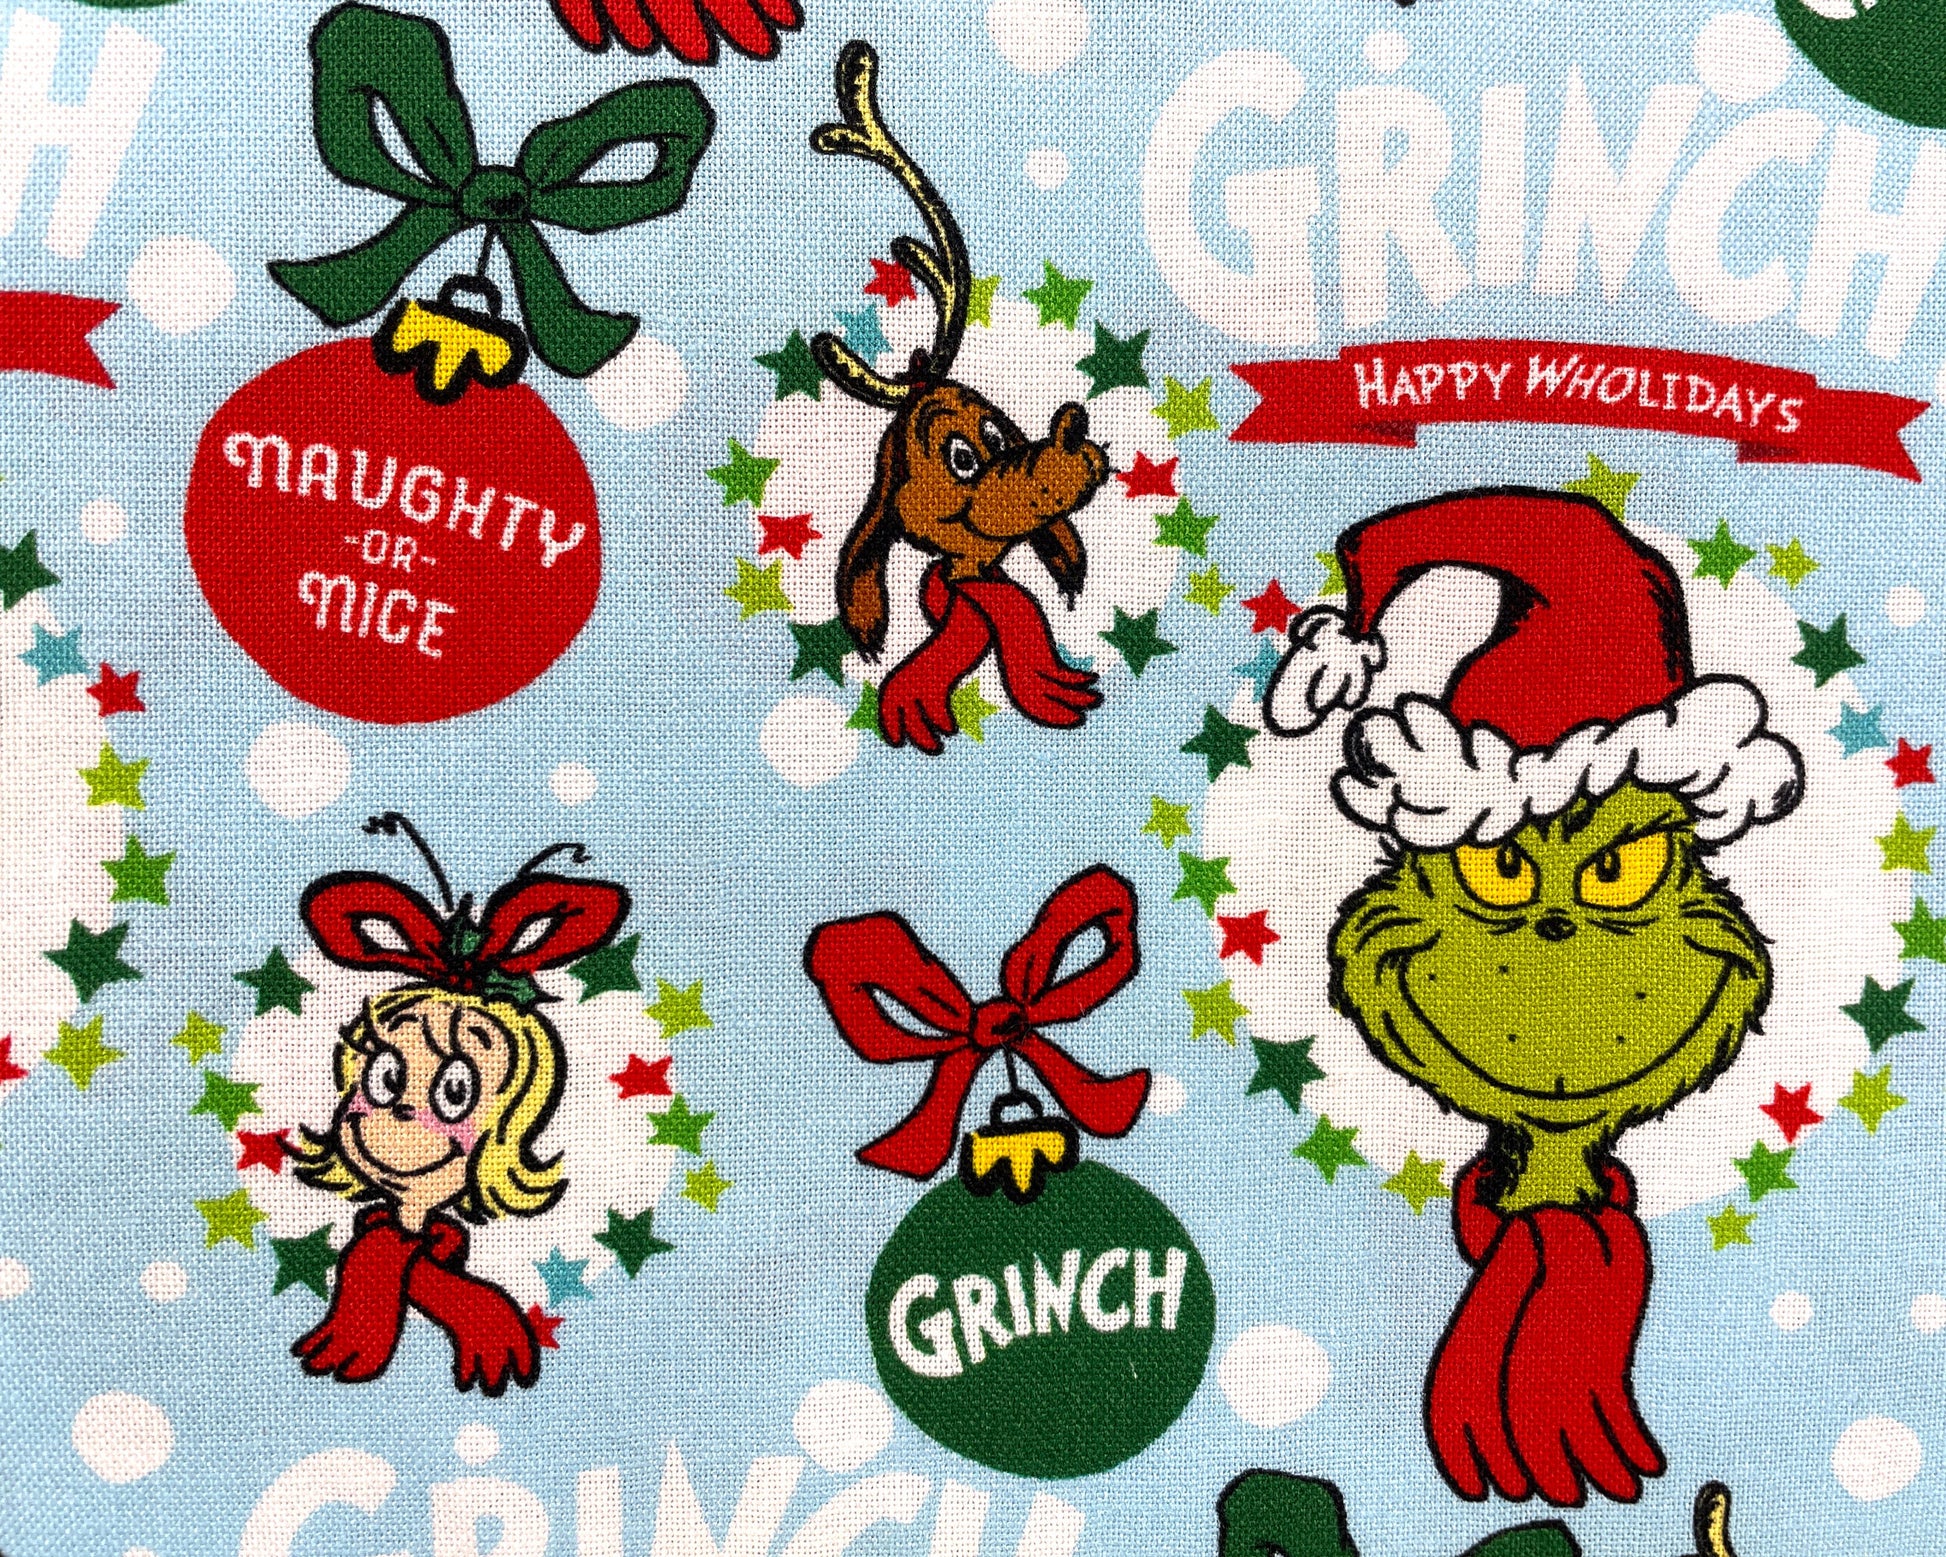 Robert Kaufman Grinch Fabric - Naughty or Nice Dr. Seuss - How the Grinch Stole Christmas - 100% cotton - Christmas Fabric - SHIPS NEXT DAY